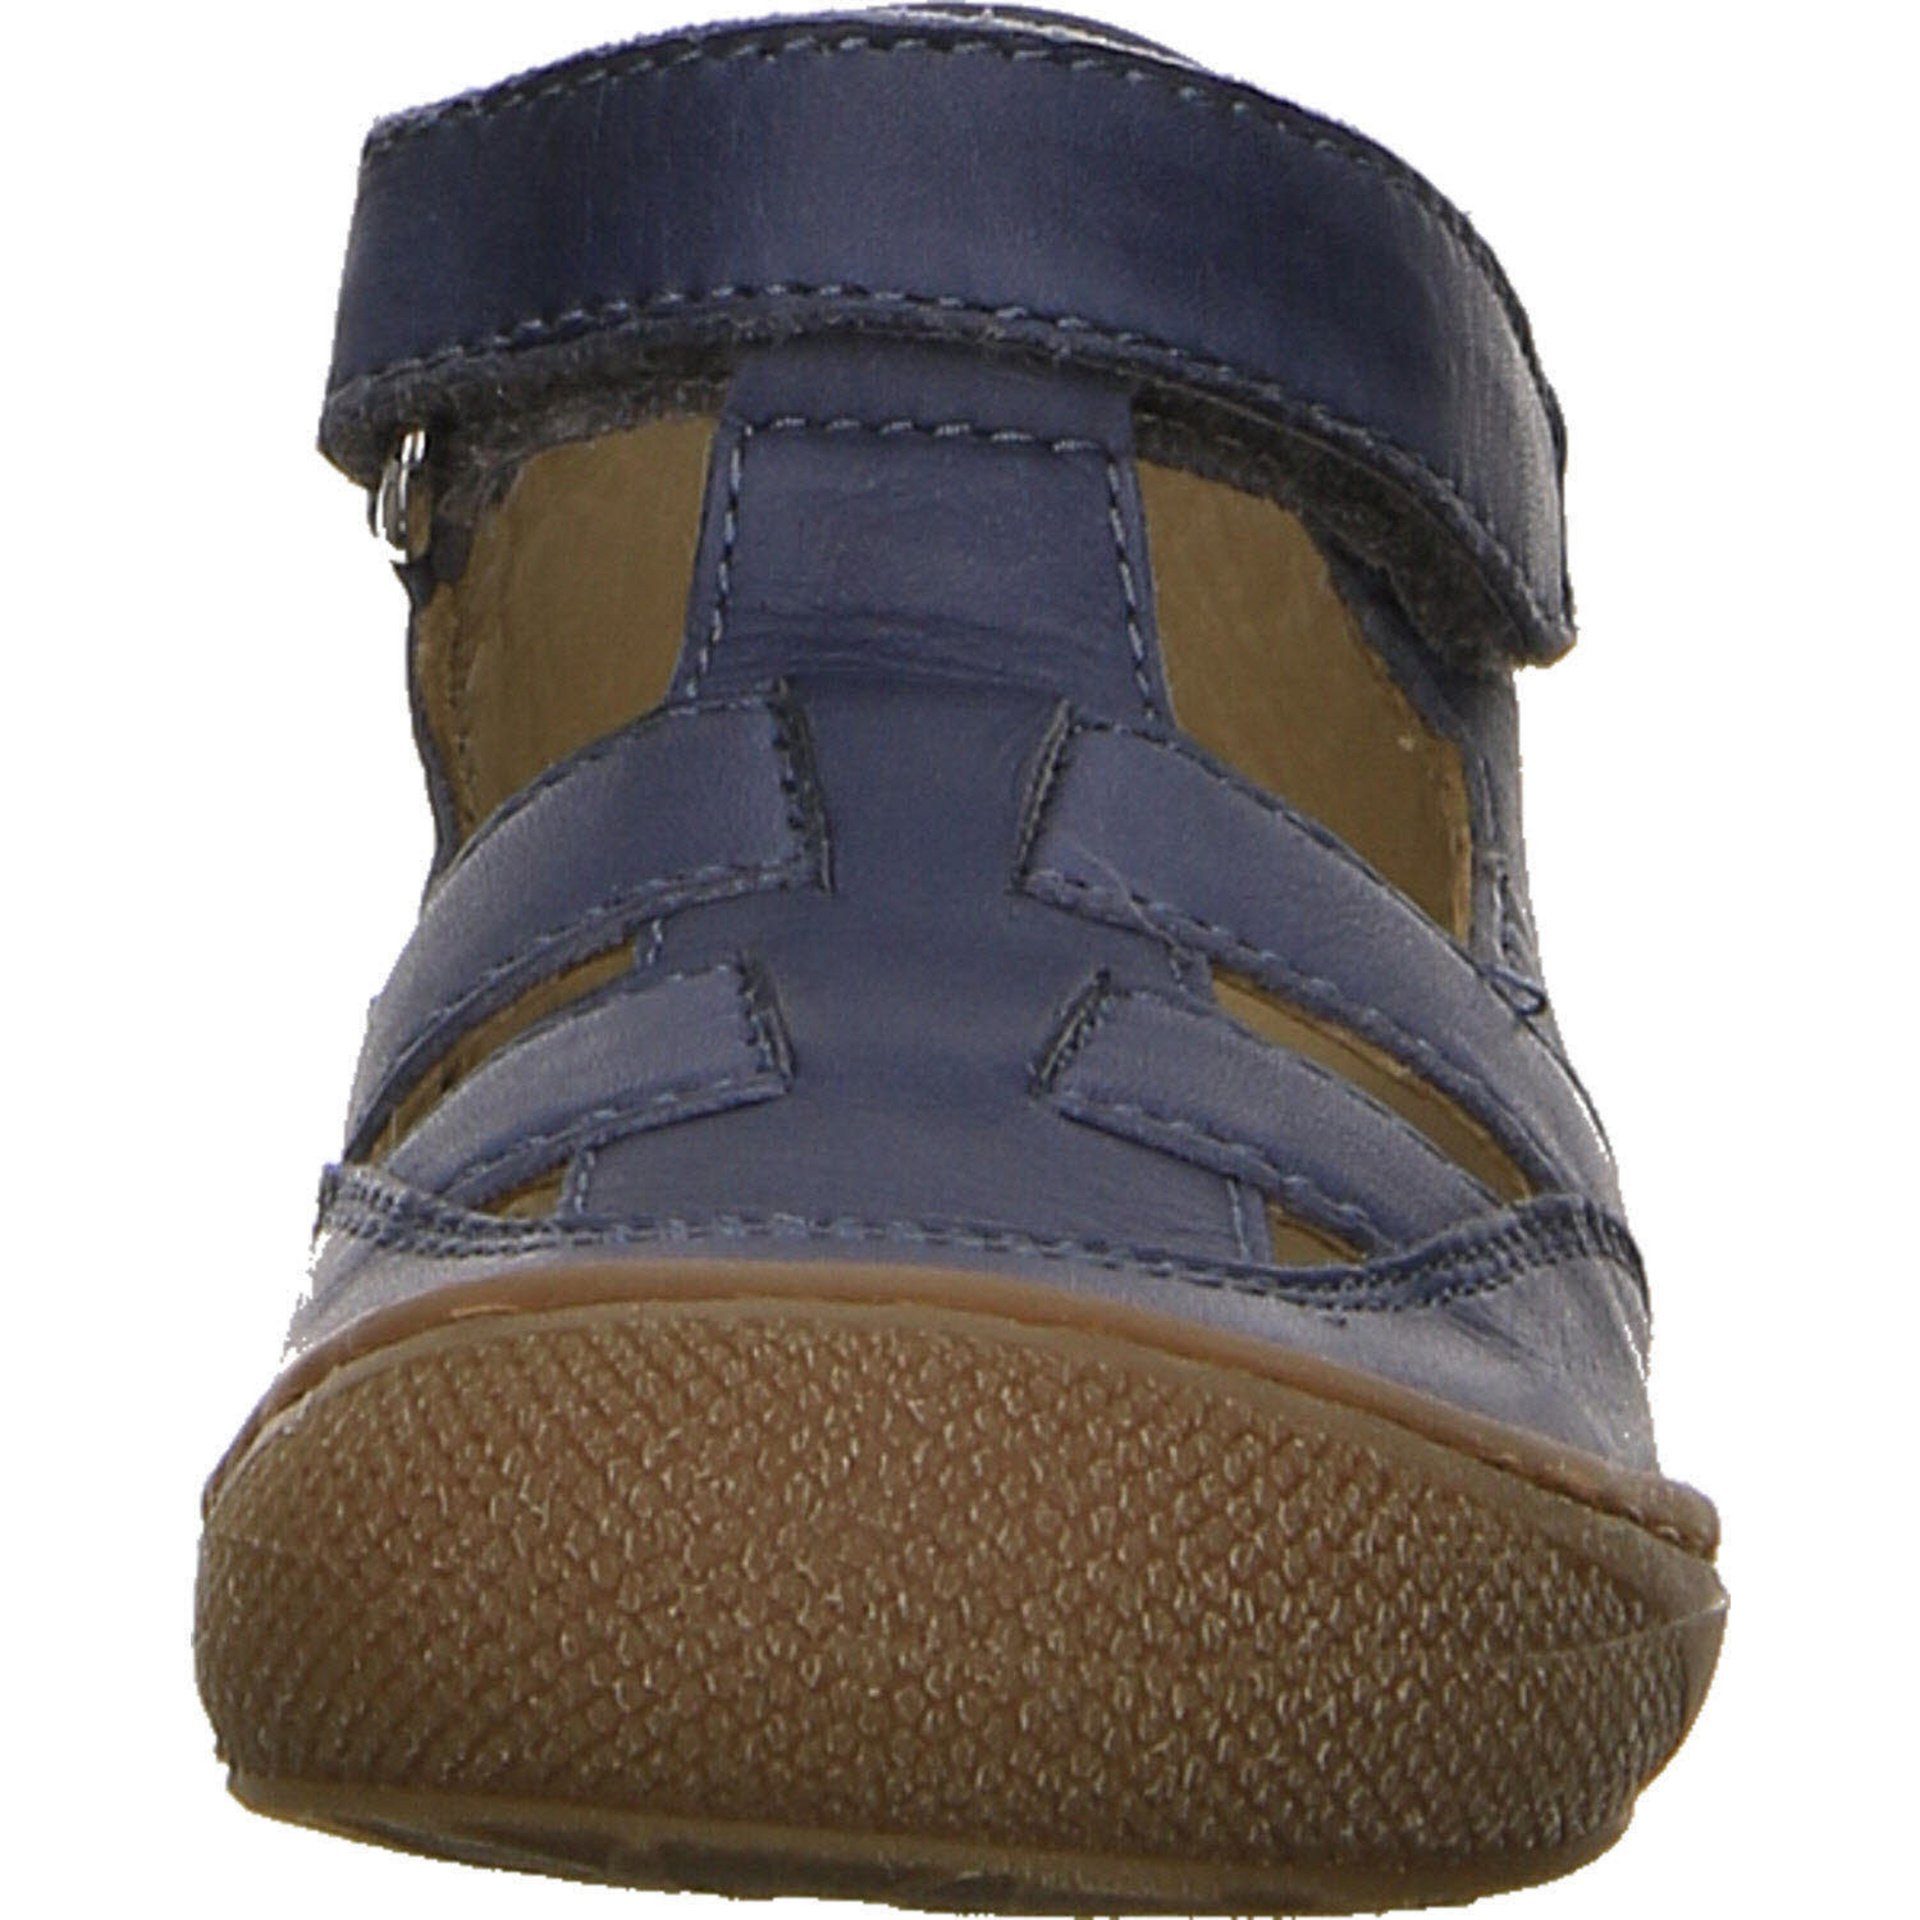 Naturino Mädchen Sandalen Schuhe Wad mittel Kinderschuhe Glattleder Sandale Minilette blau